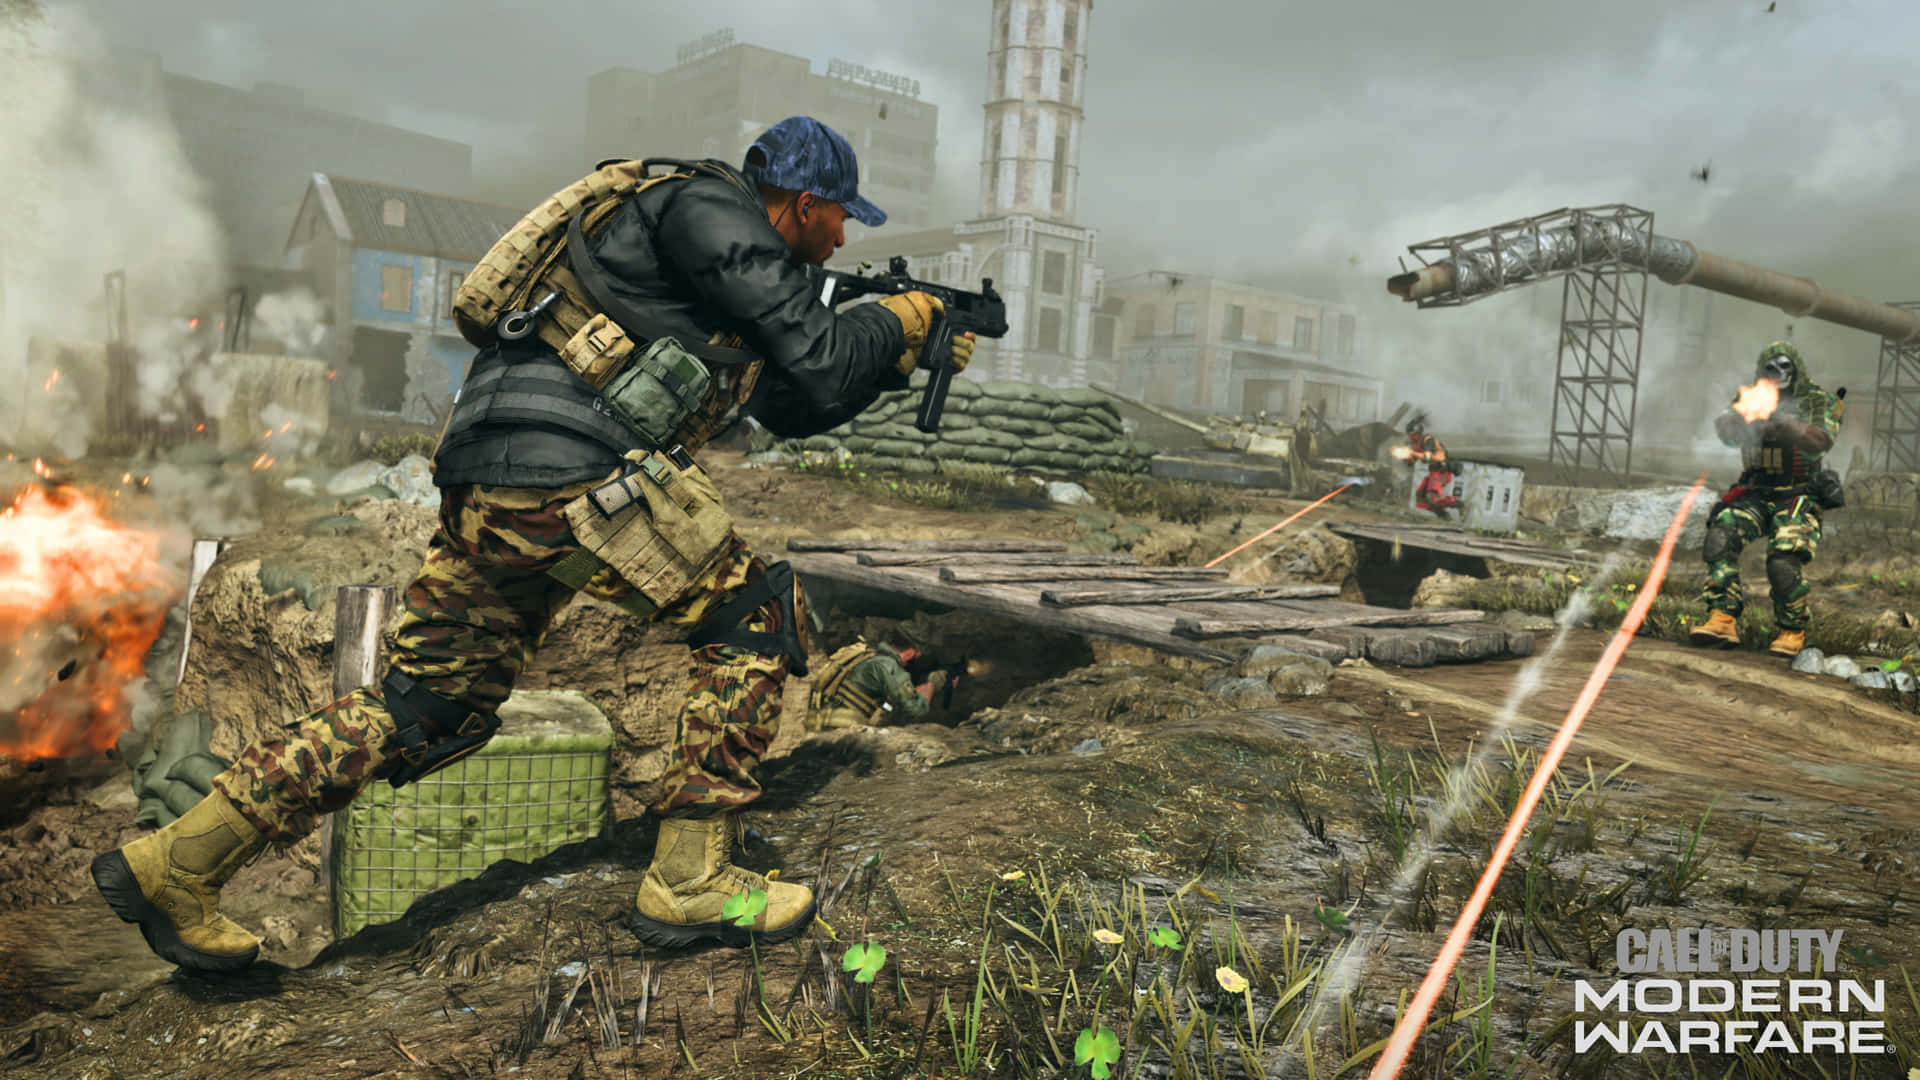 Prontoper La Battaglia: Call Of Duty Modern Warfare In Hd